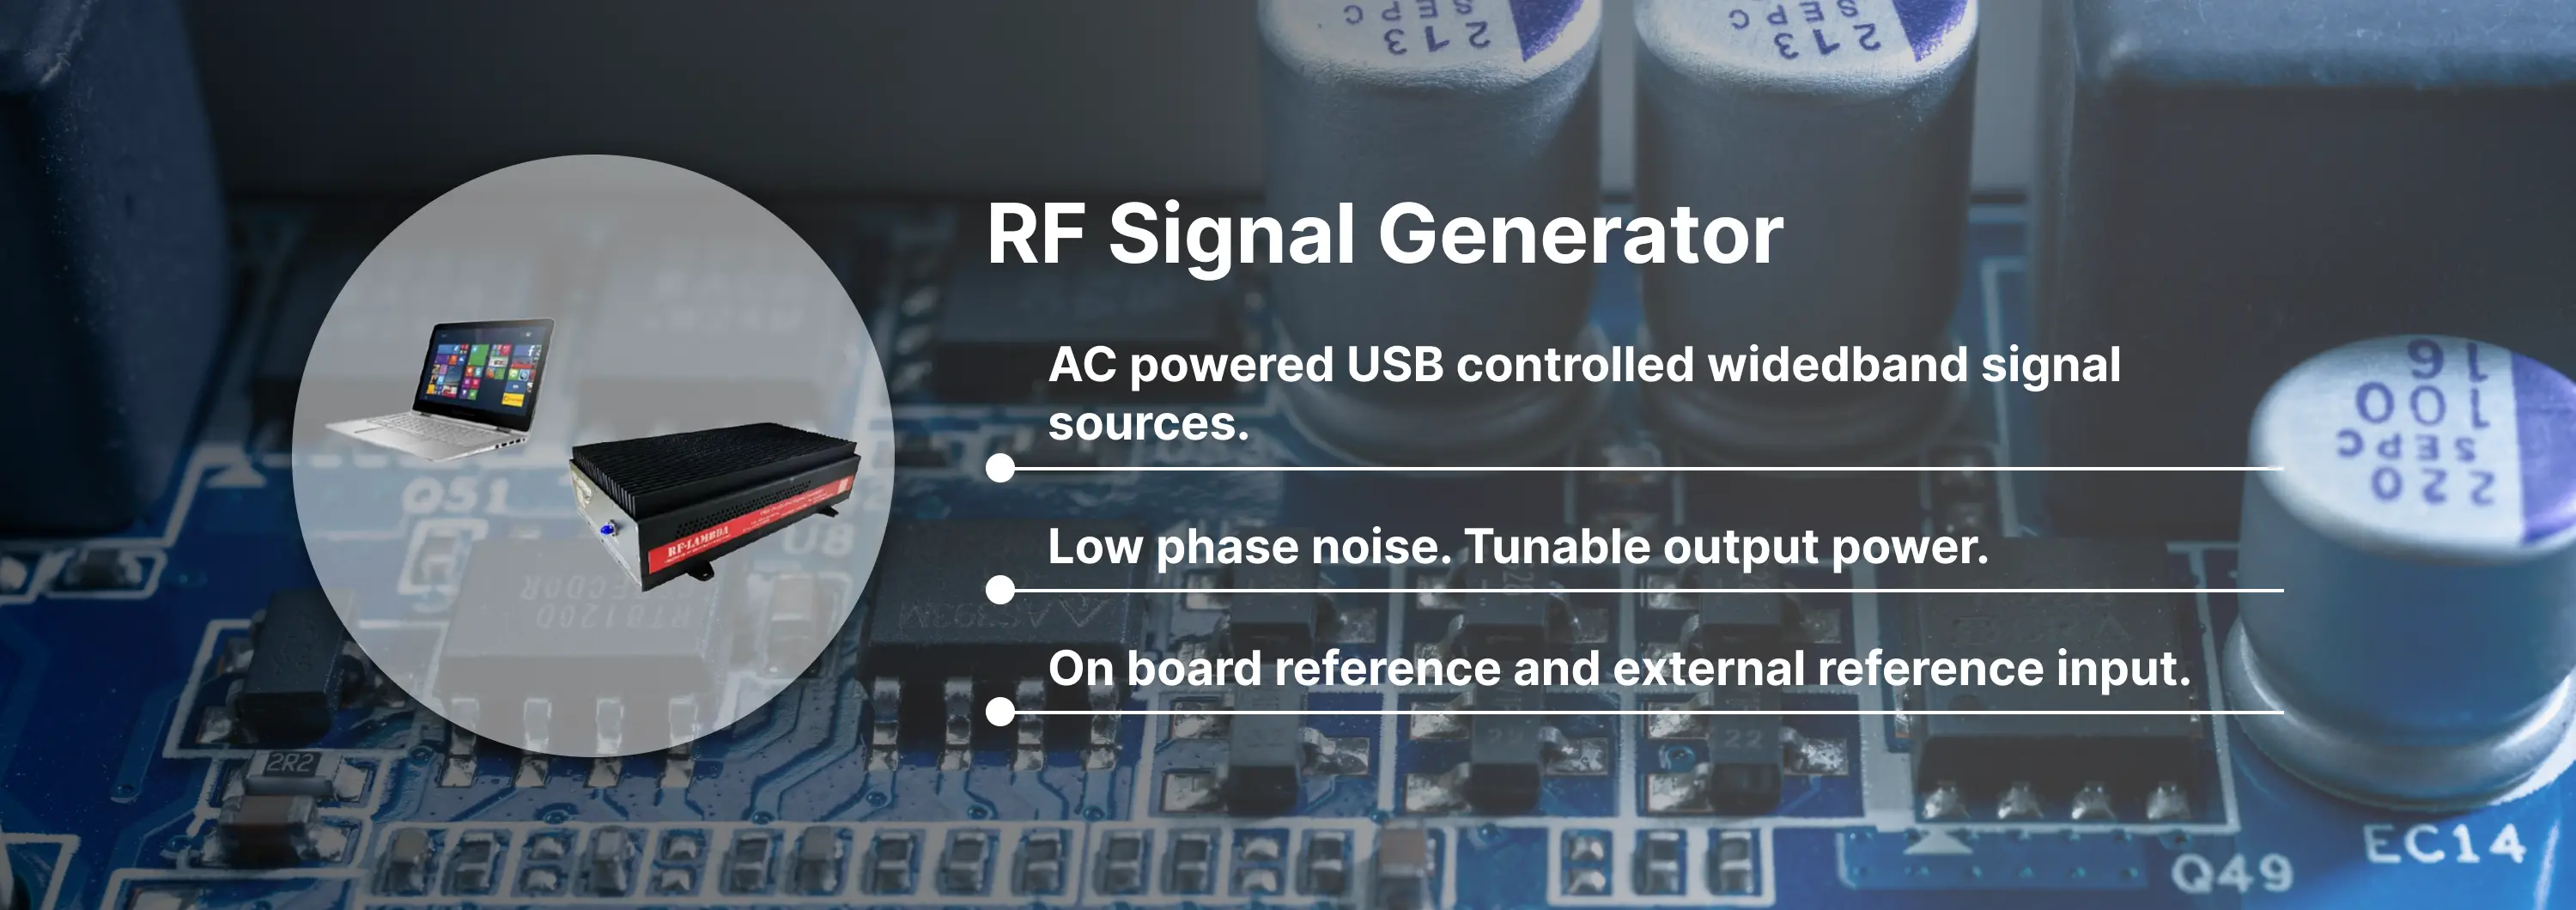 RF Signal Generator Banner